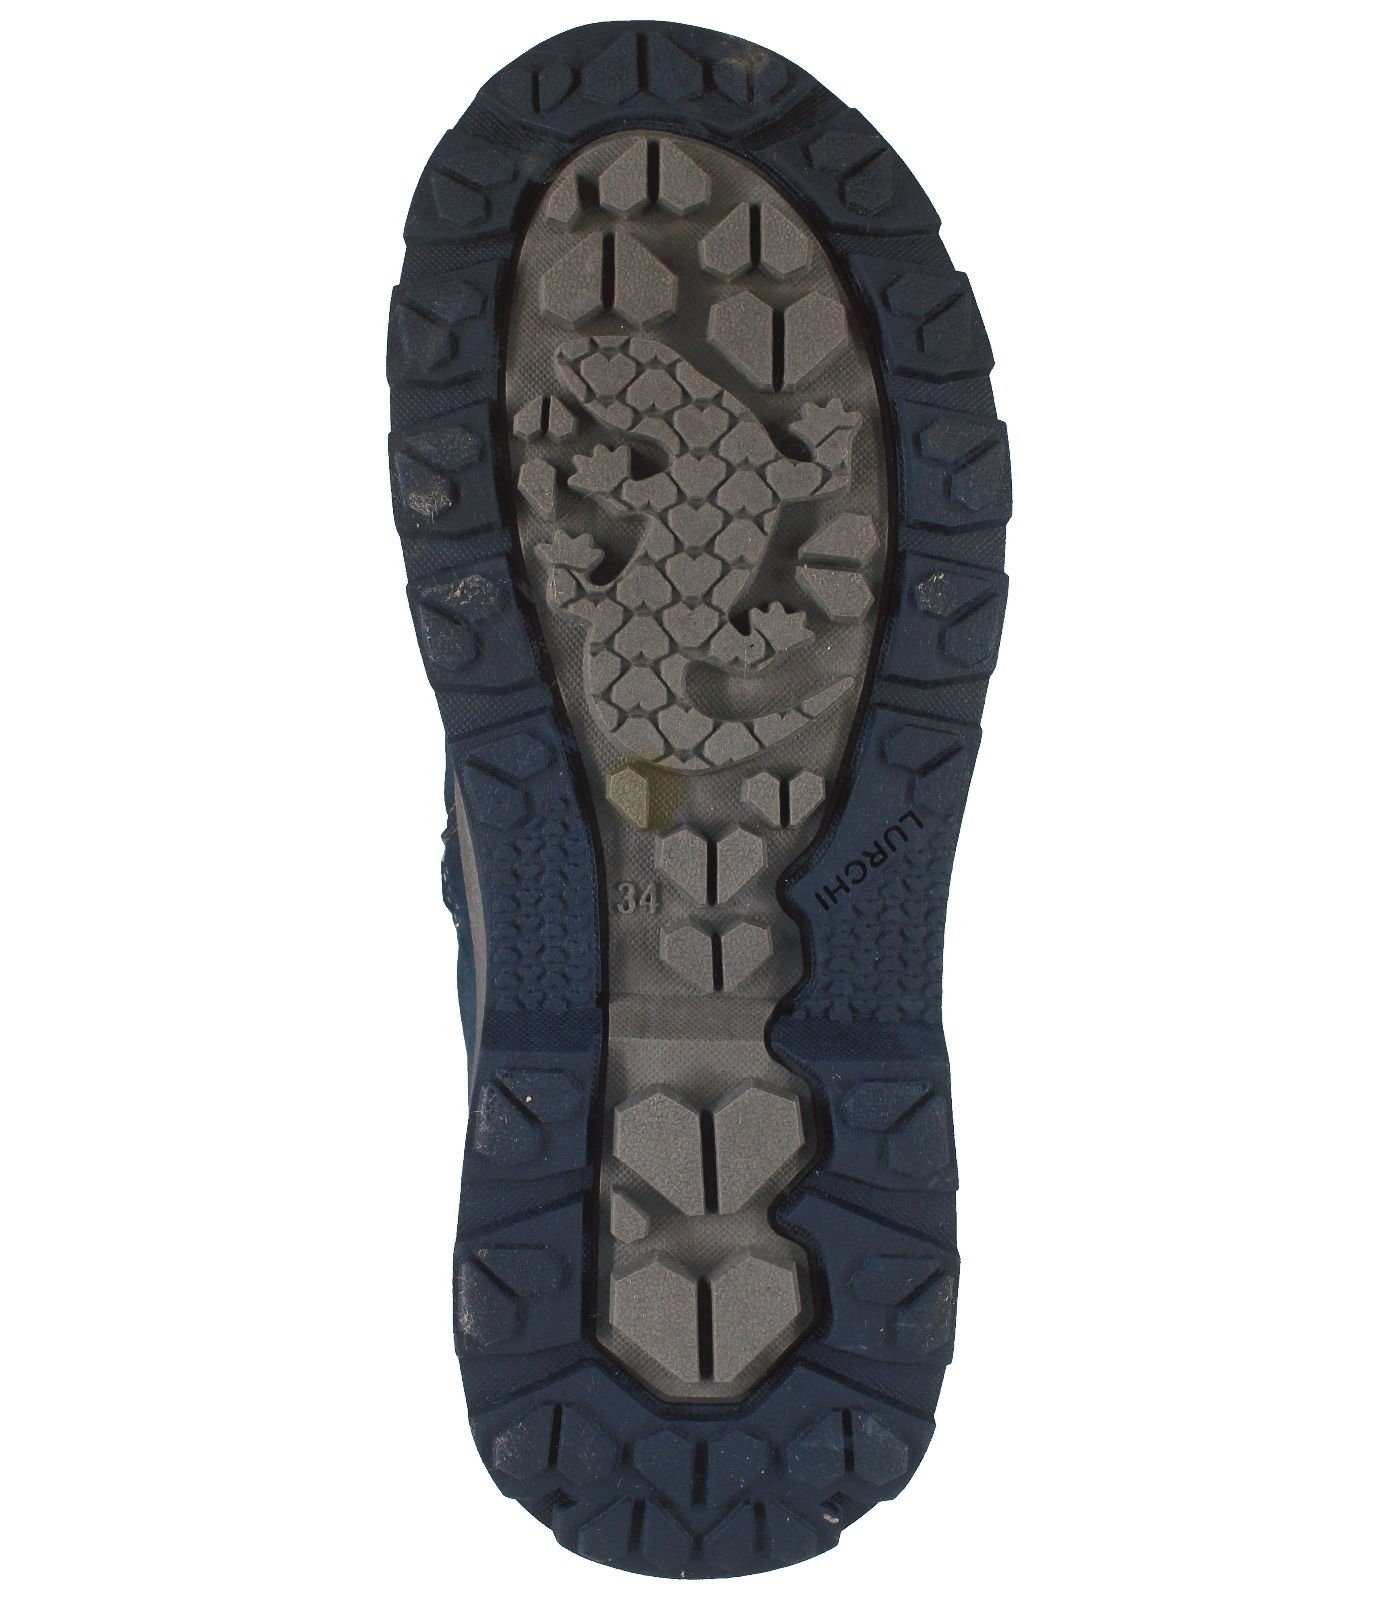 Winterstiefel Lederimitat/Textil Stiefel 044037 blau Salamander Lurchi